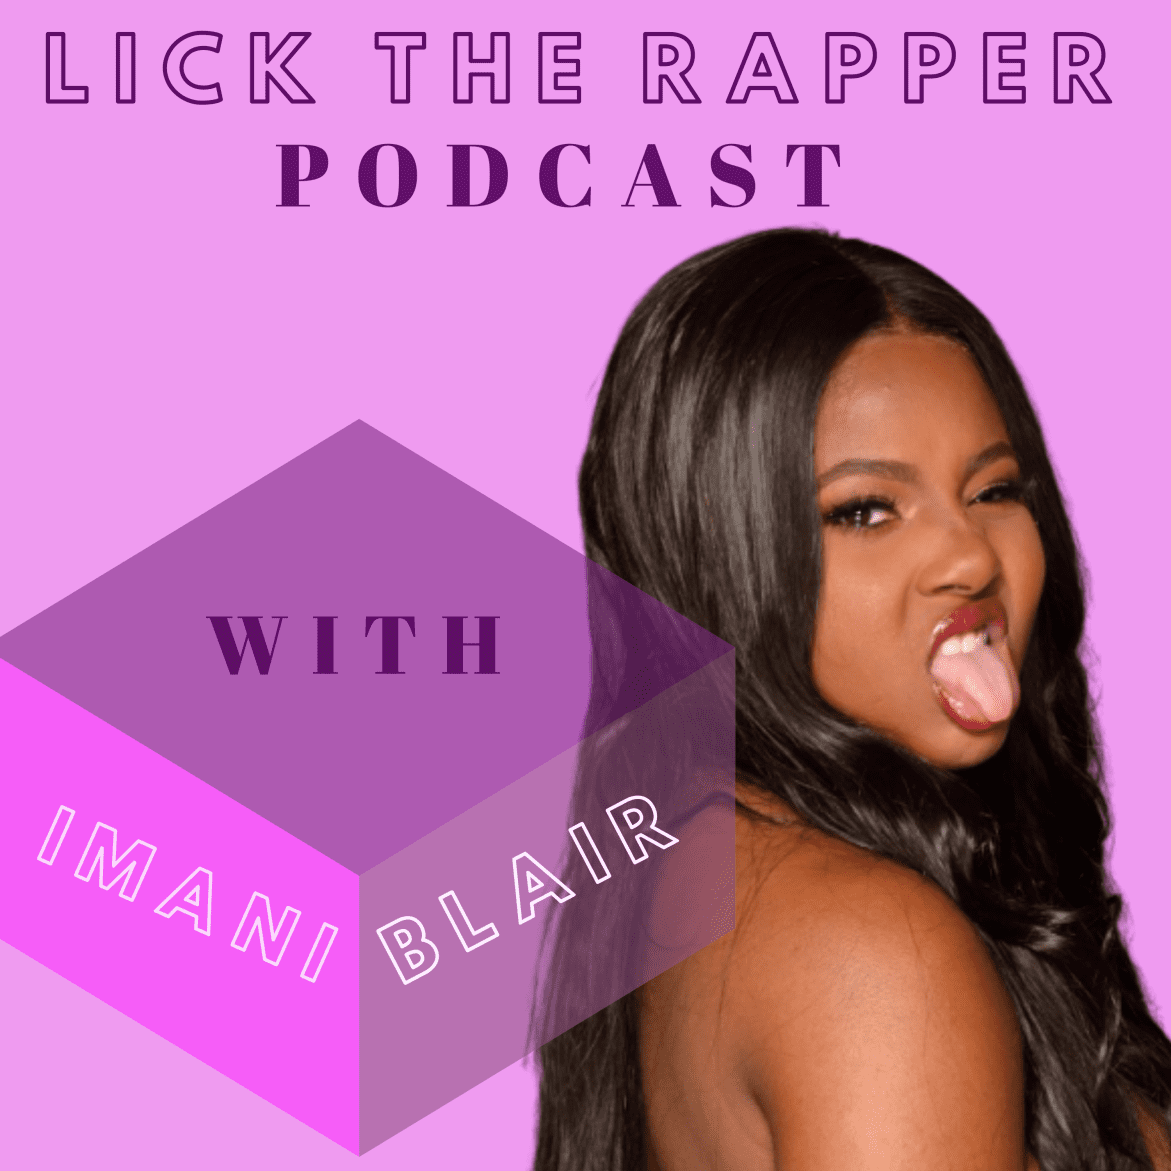 Black Podcasting - Episode 19: He Worth 20 Million, He a Big D*** Baller! ft. Lex P